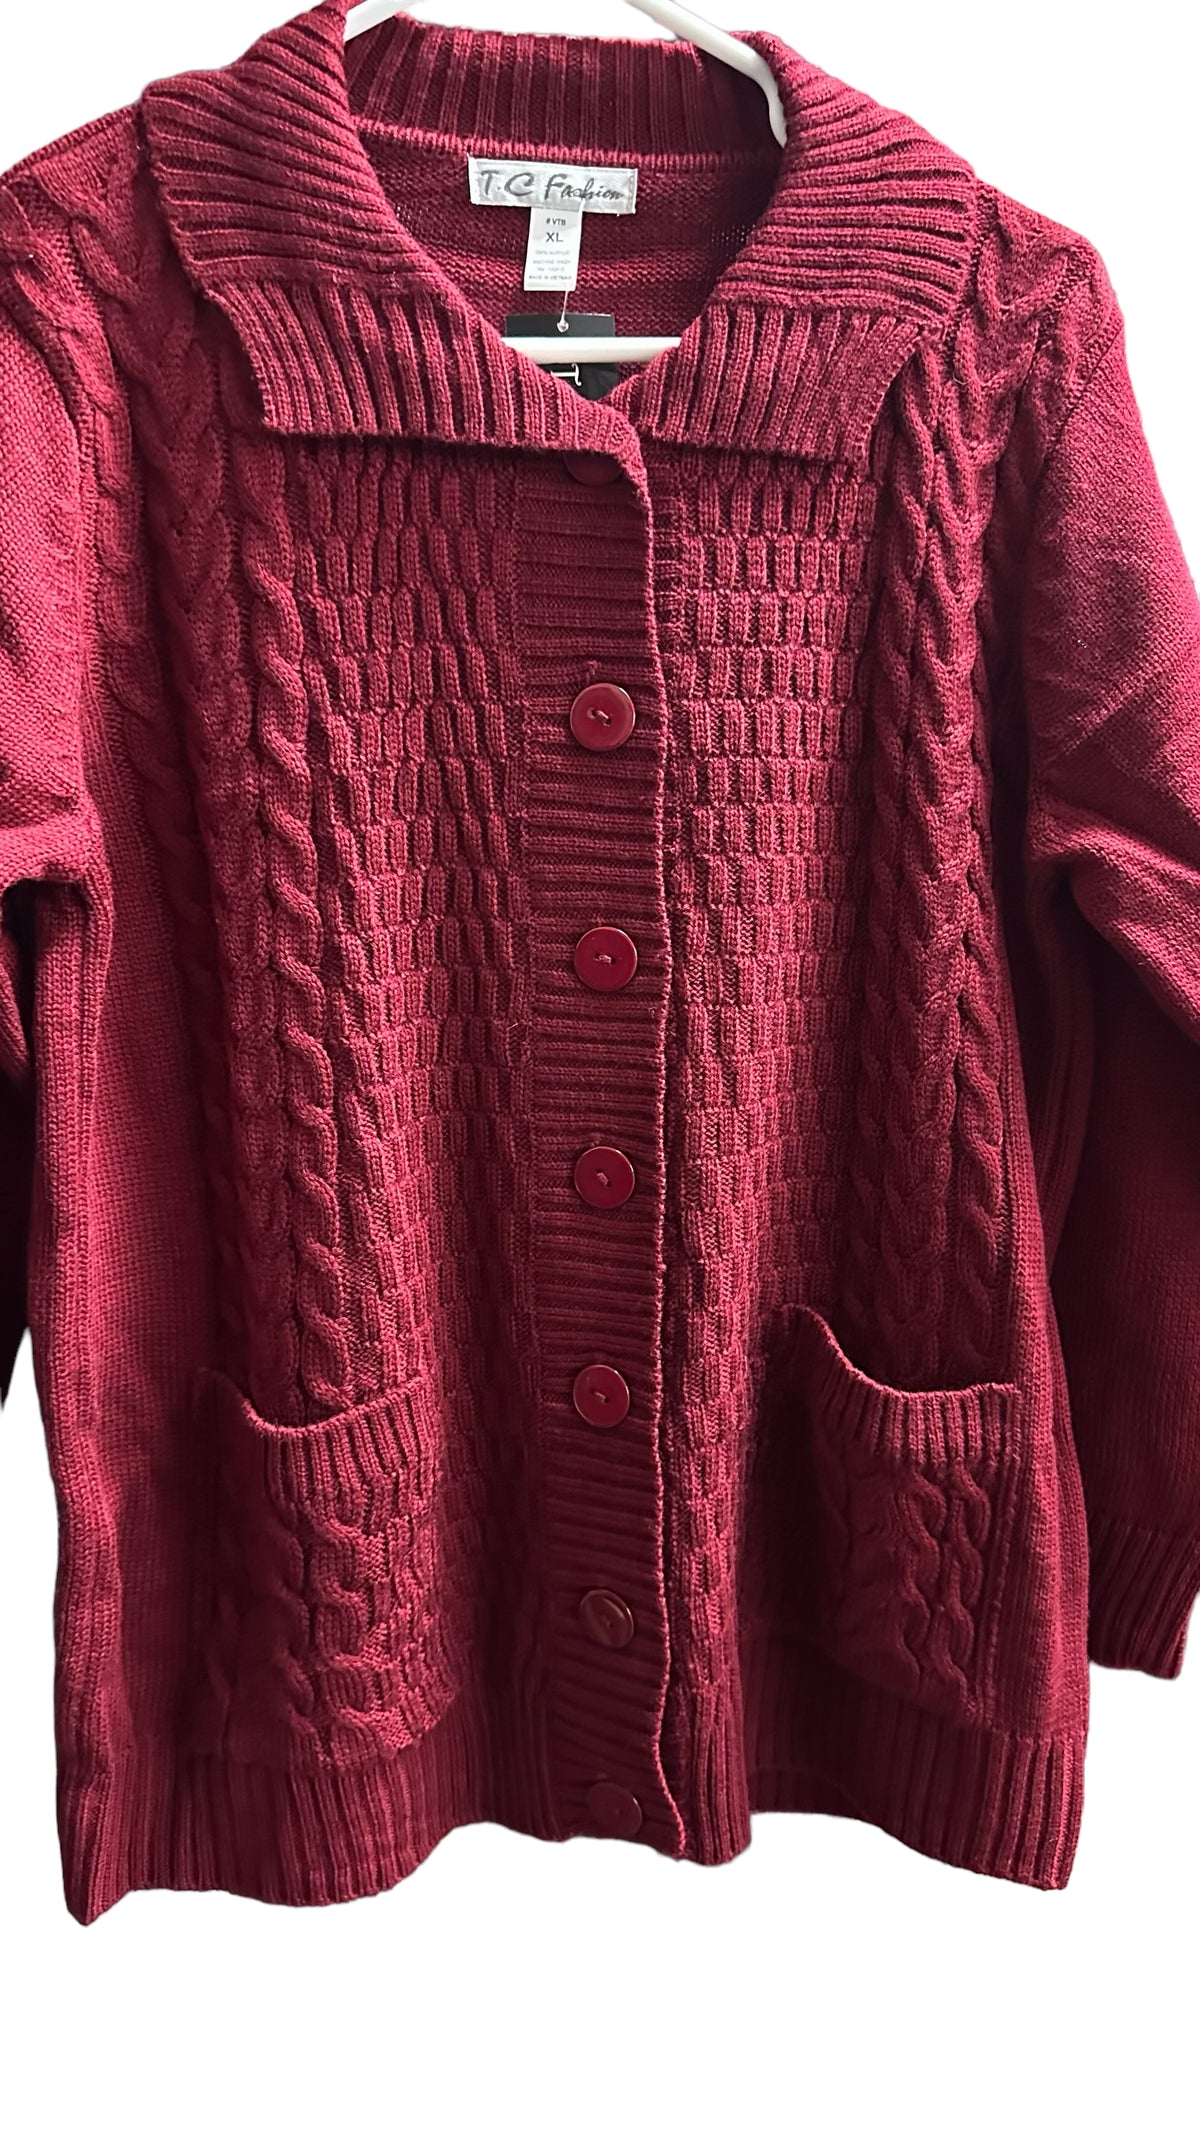 Knit cardigan sweaters